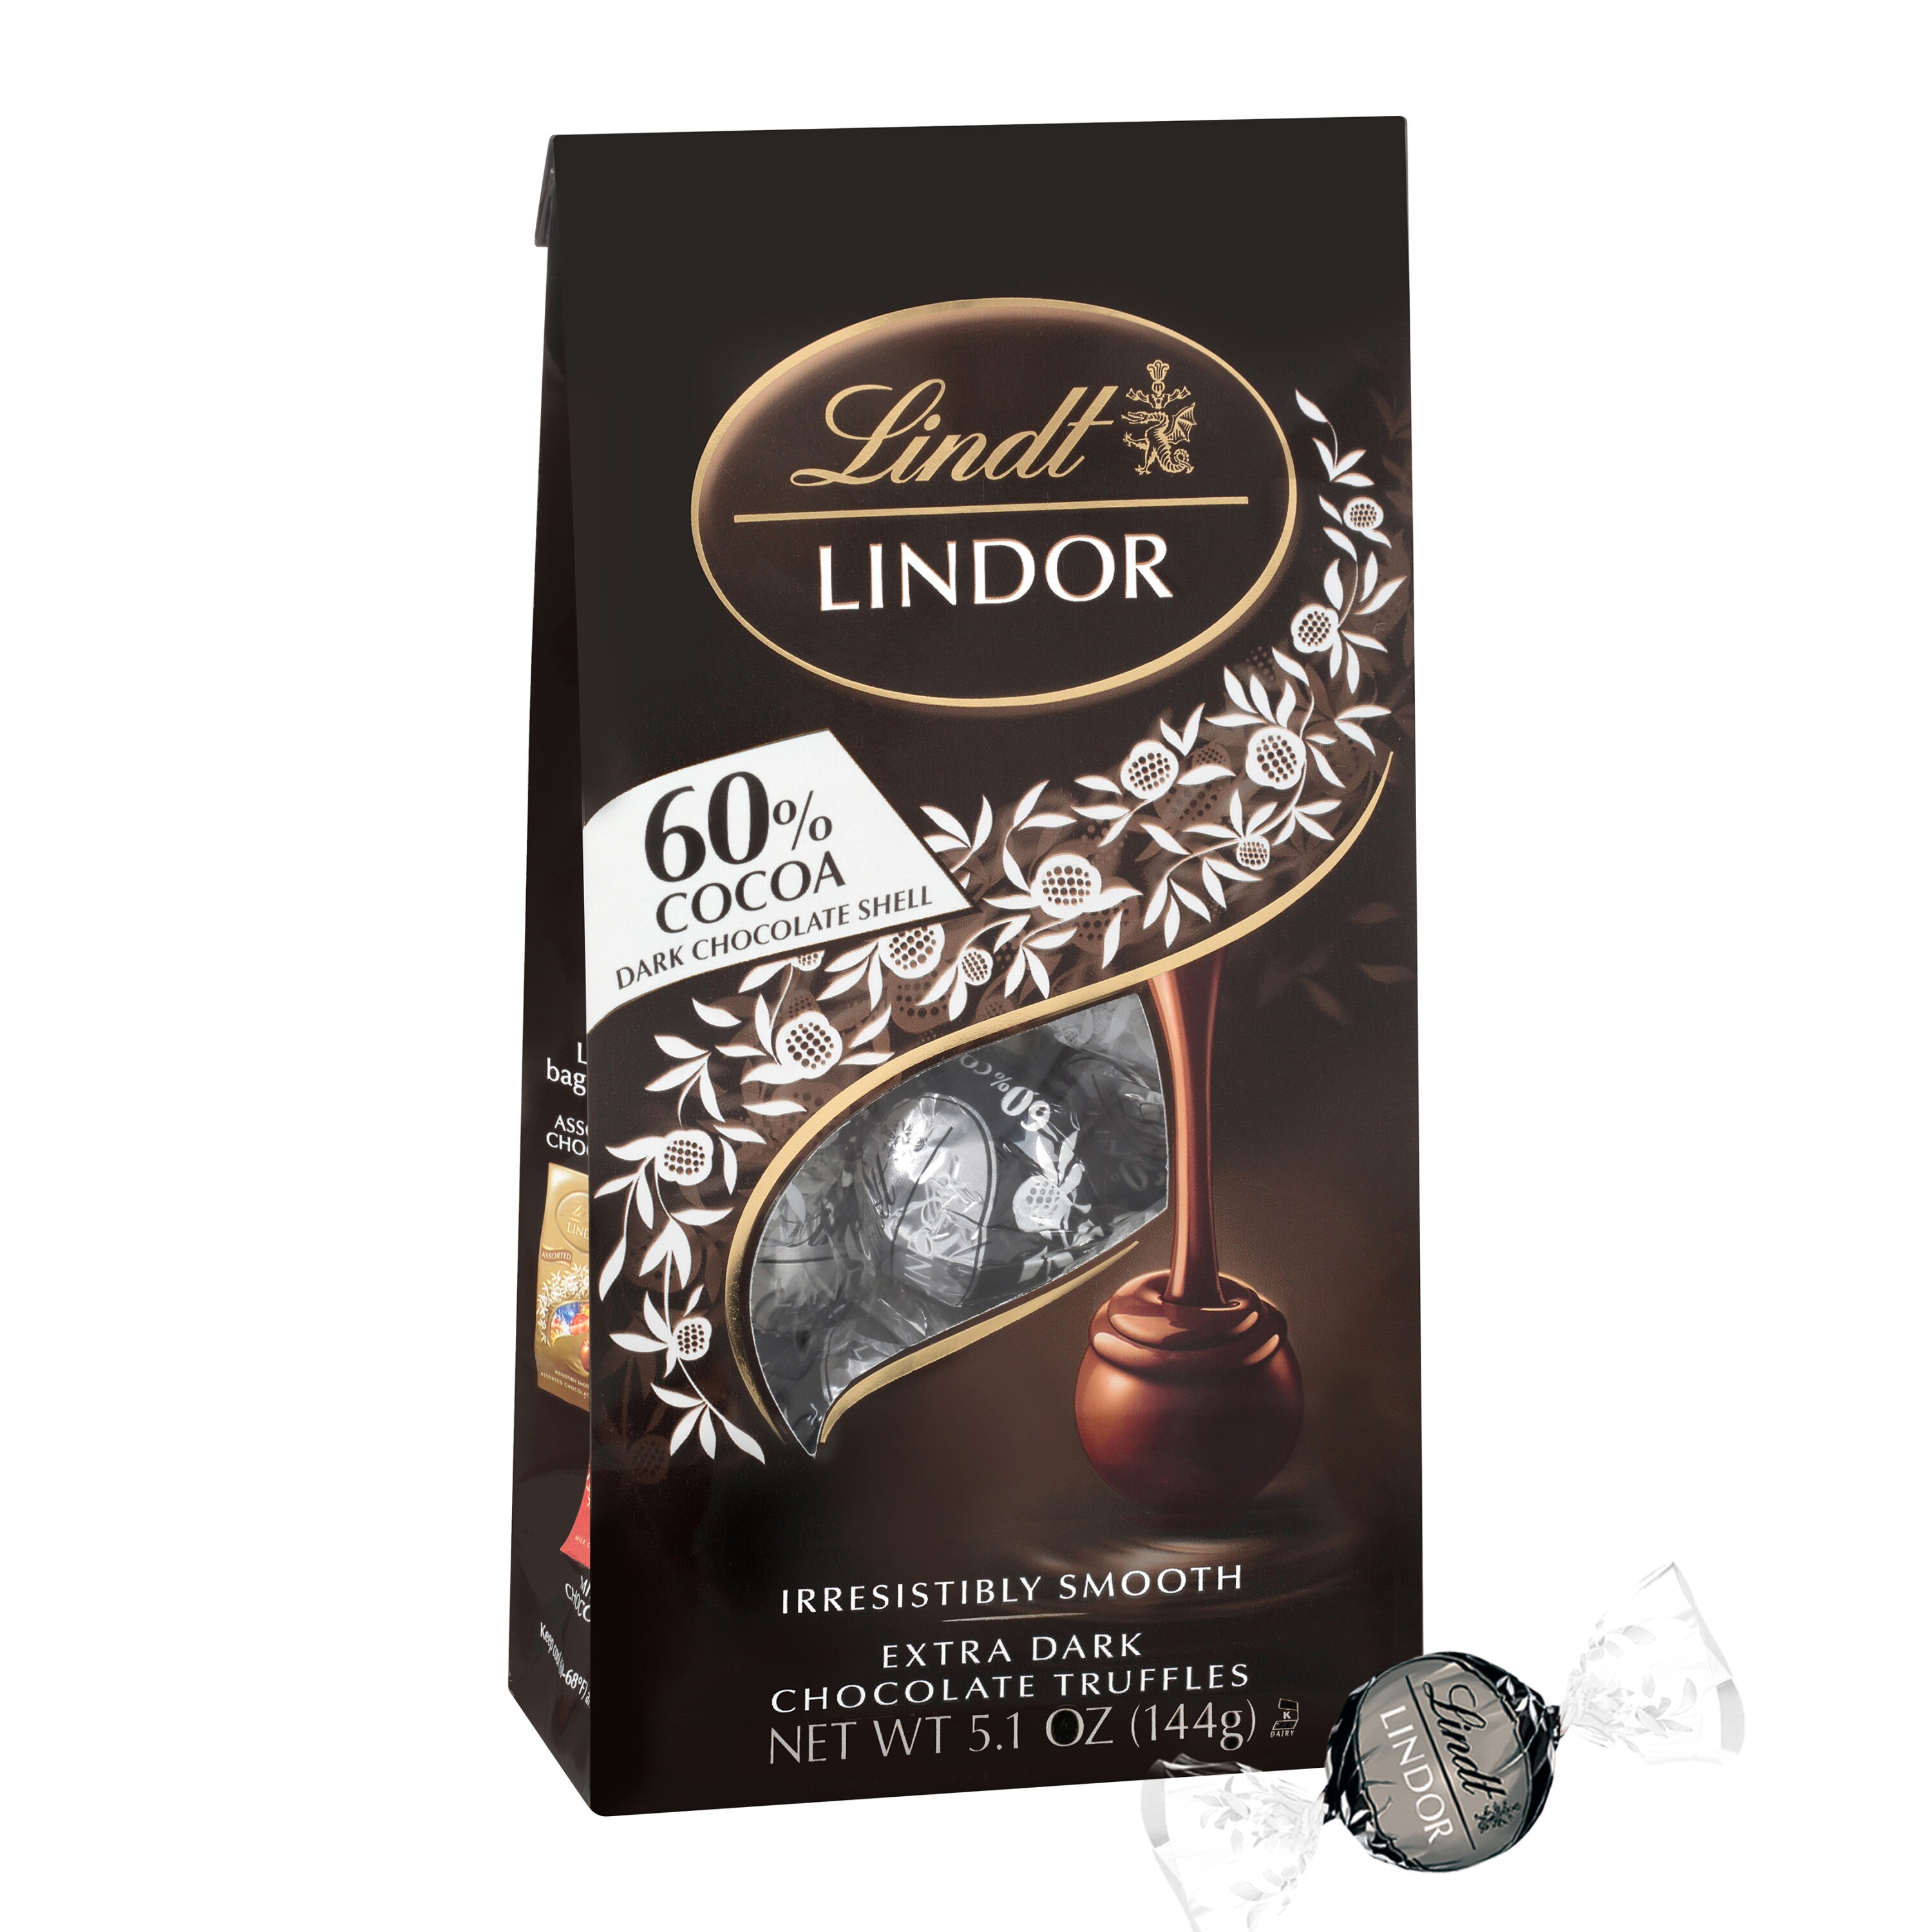 Lindt Lindor Assorted Chocolate Truffles (Review) Dark, Milk